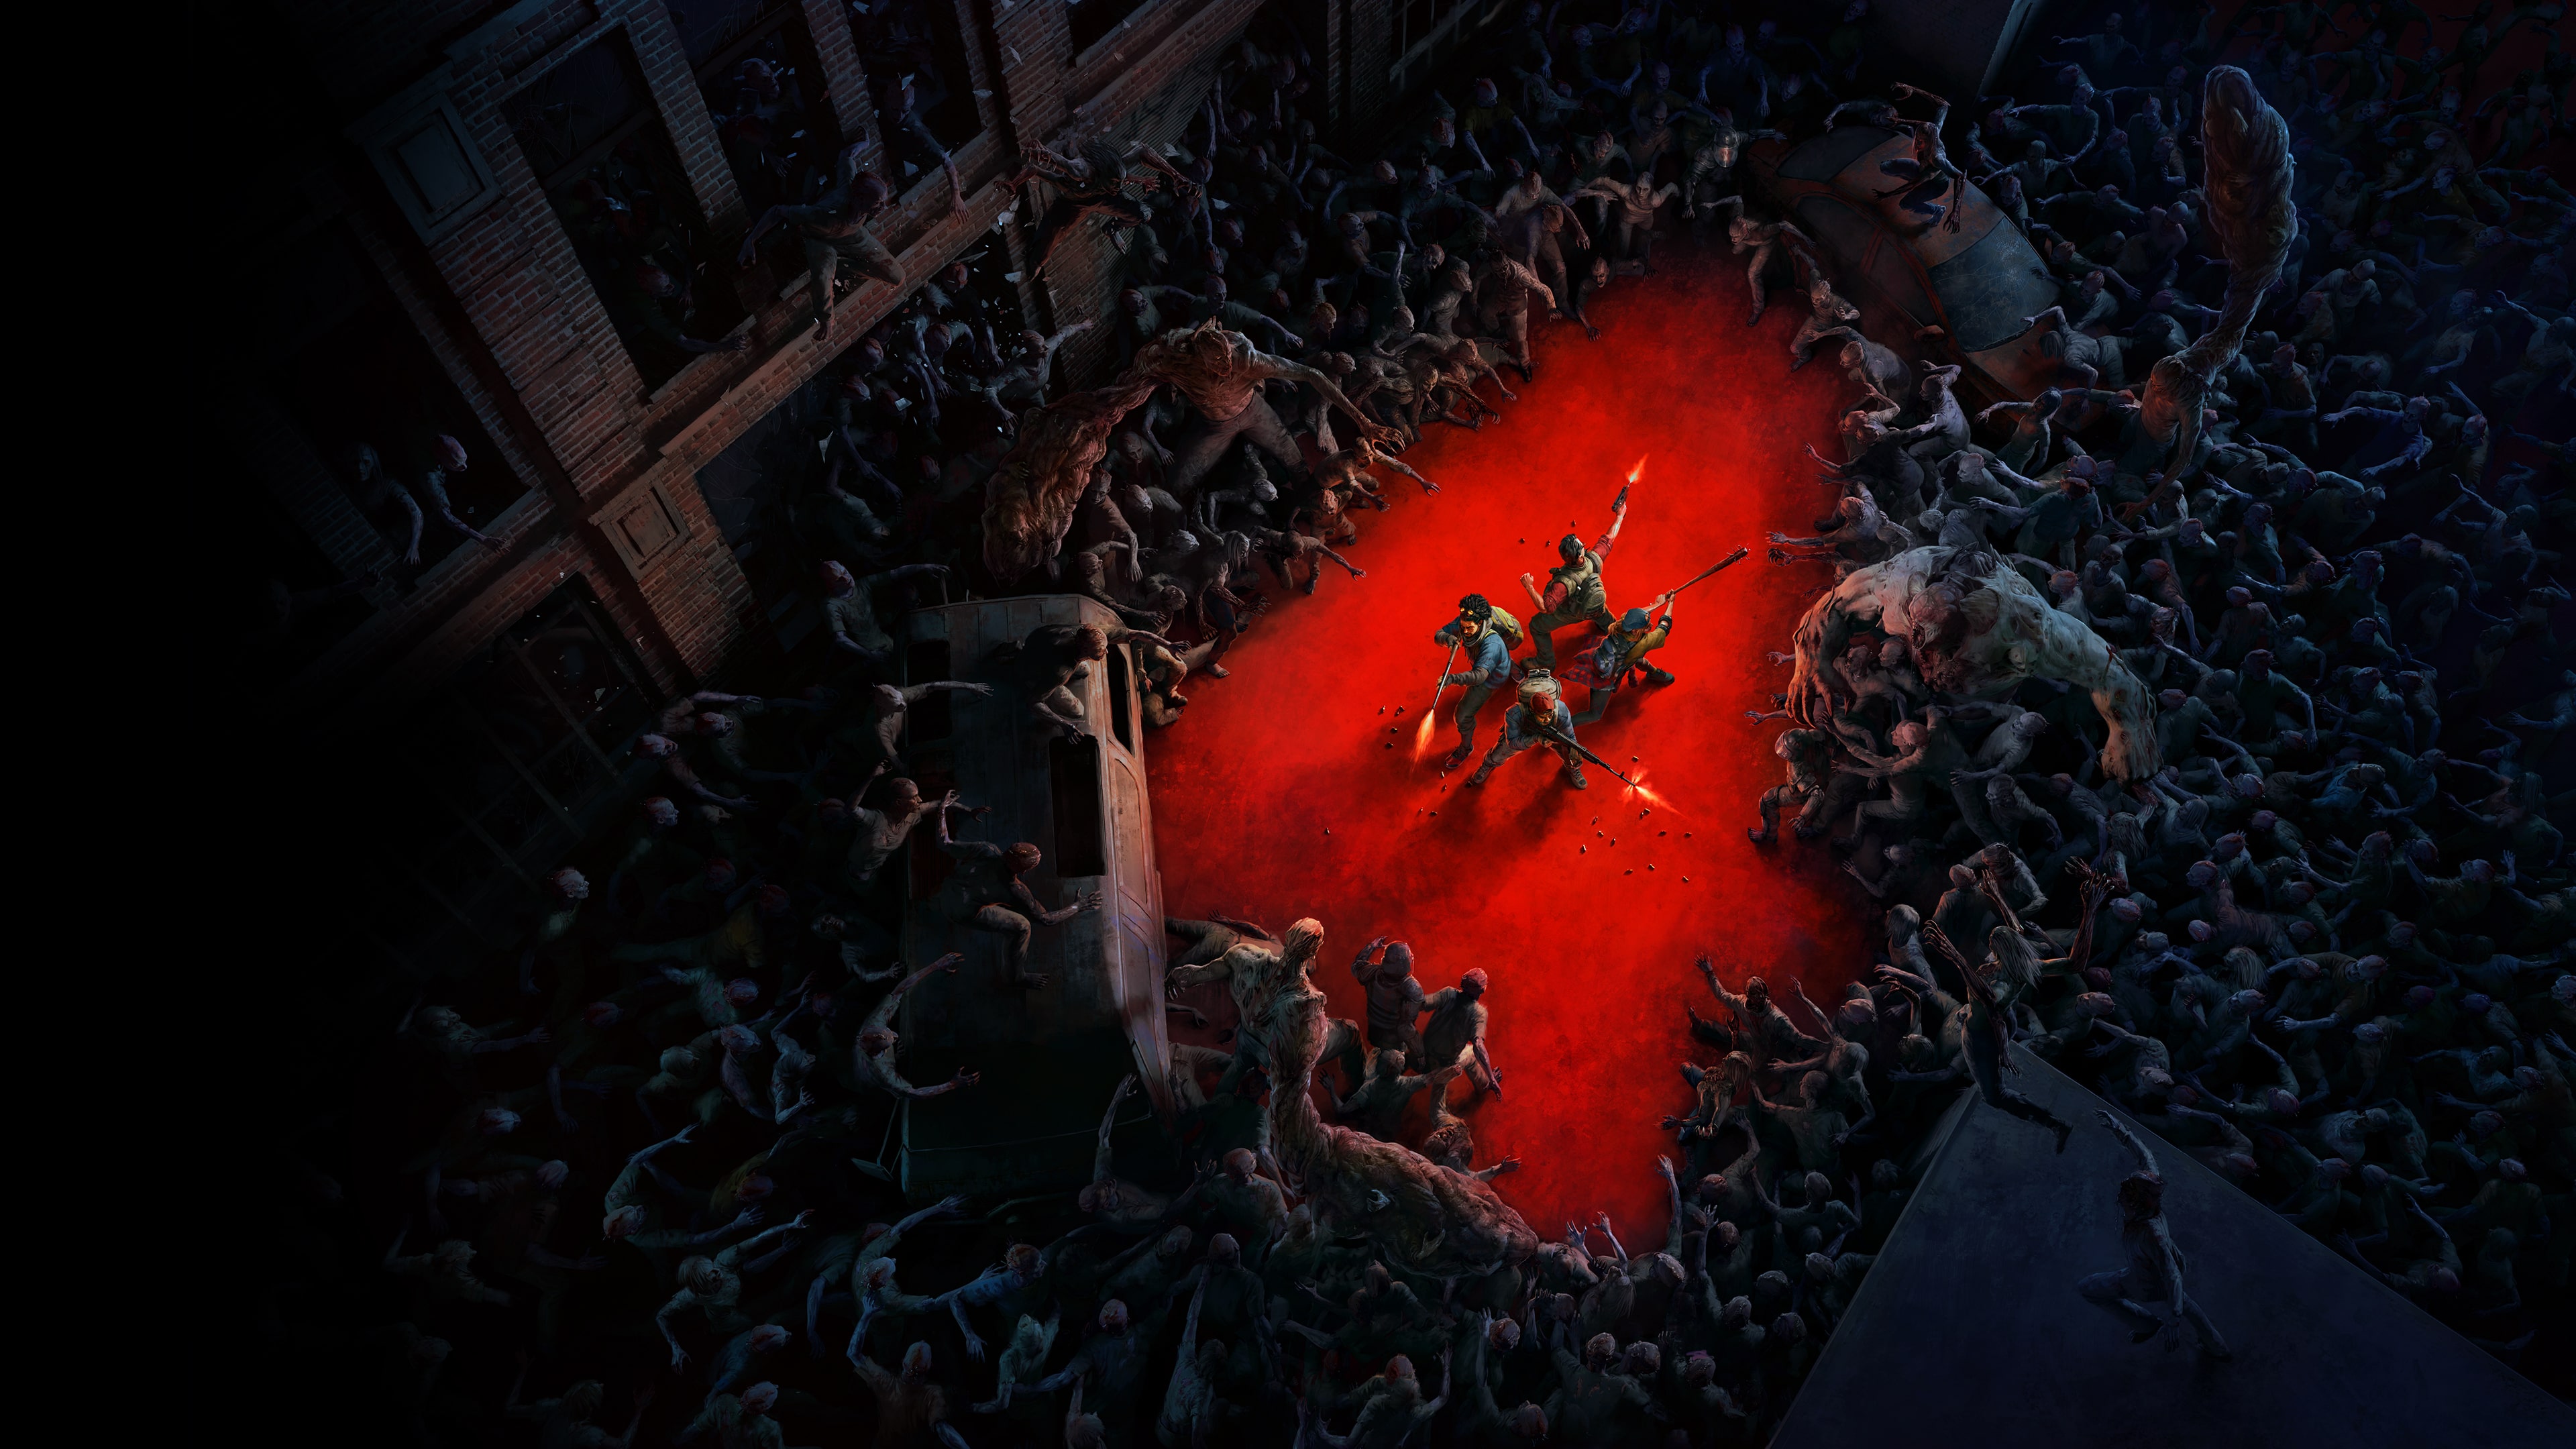 Back 4 Blood : Édition Standard PS4 & PS5